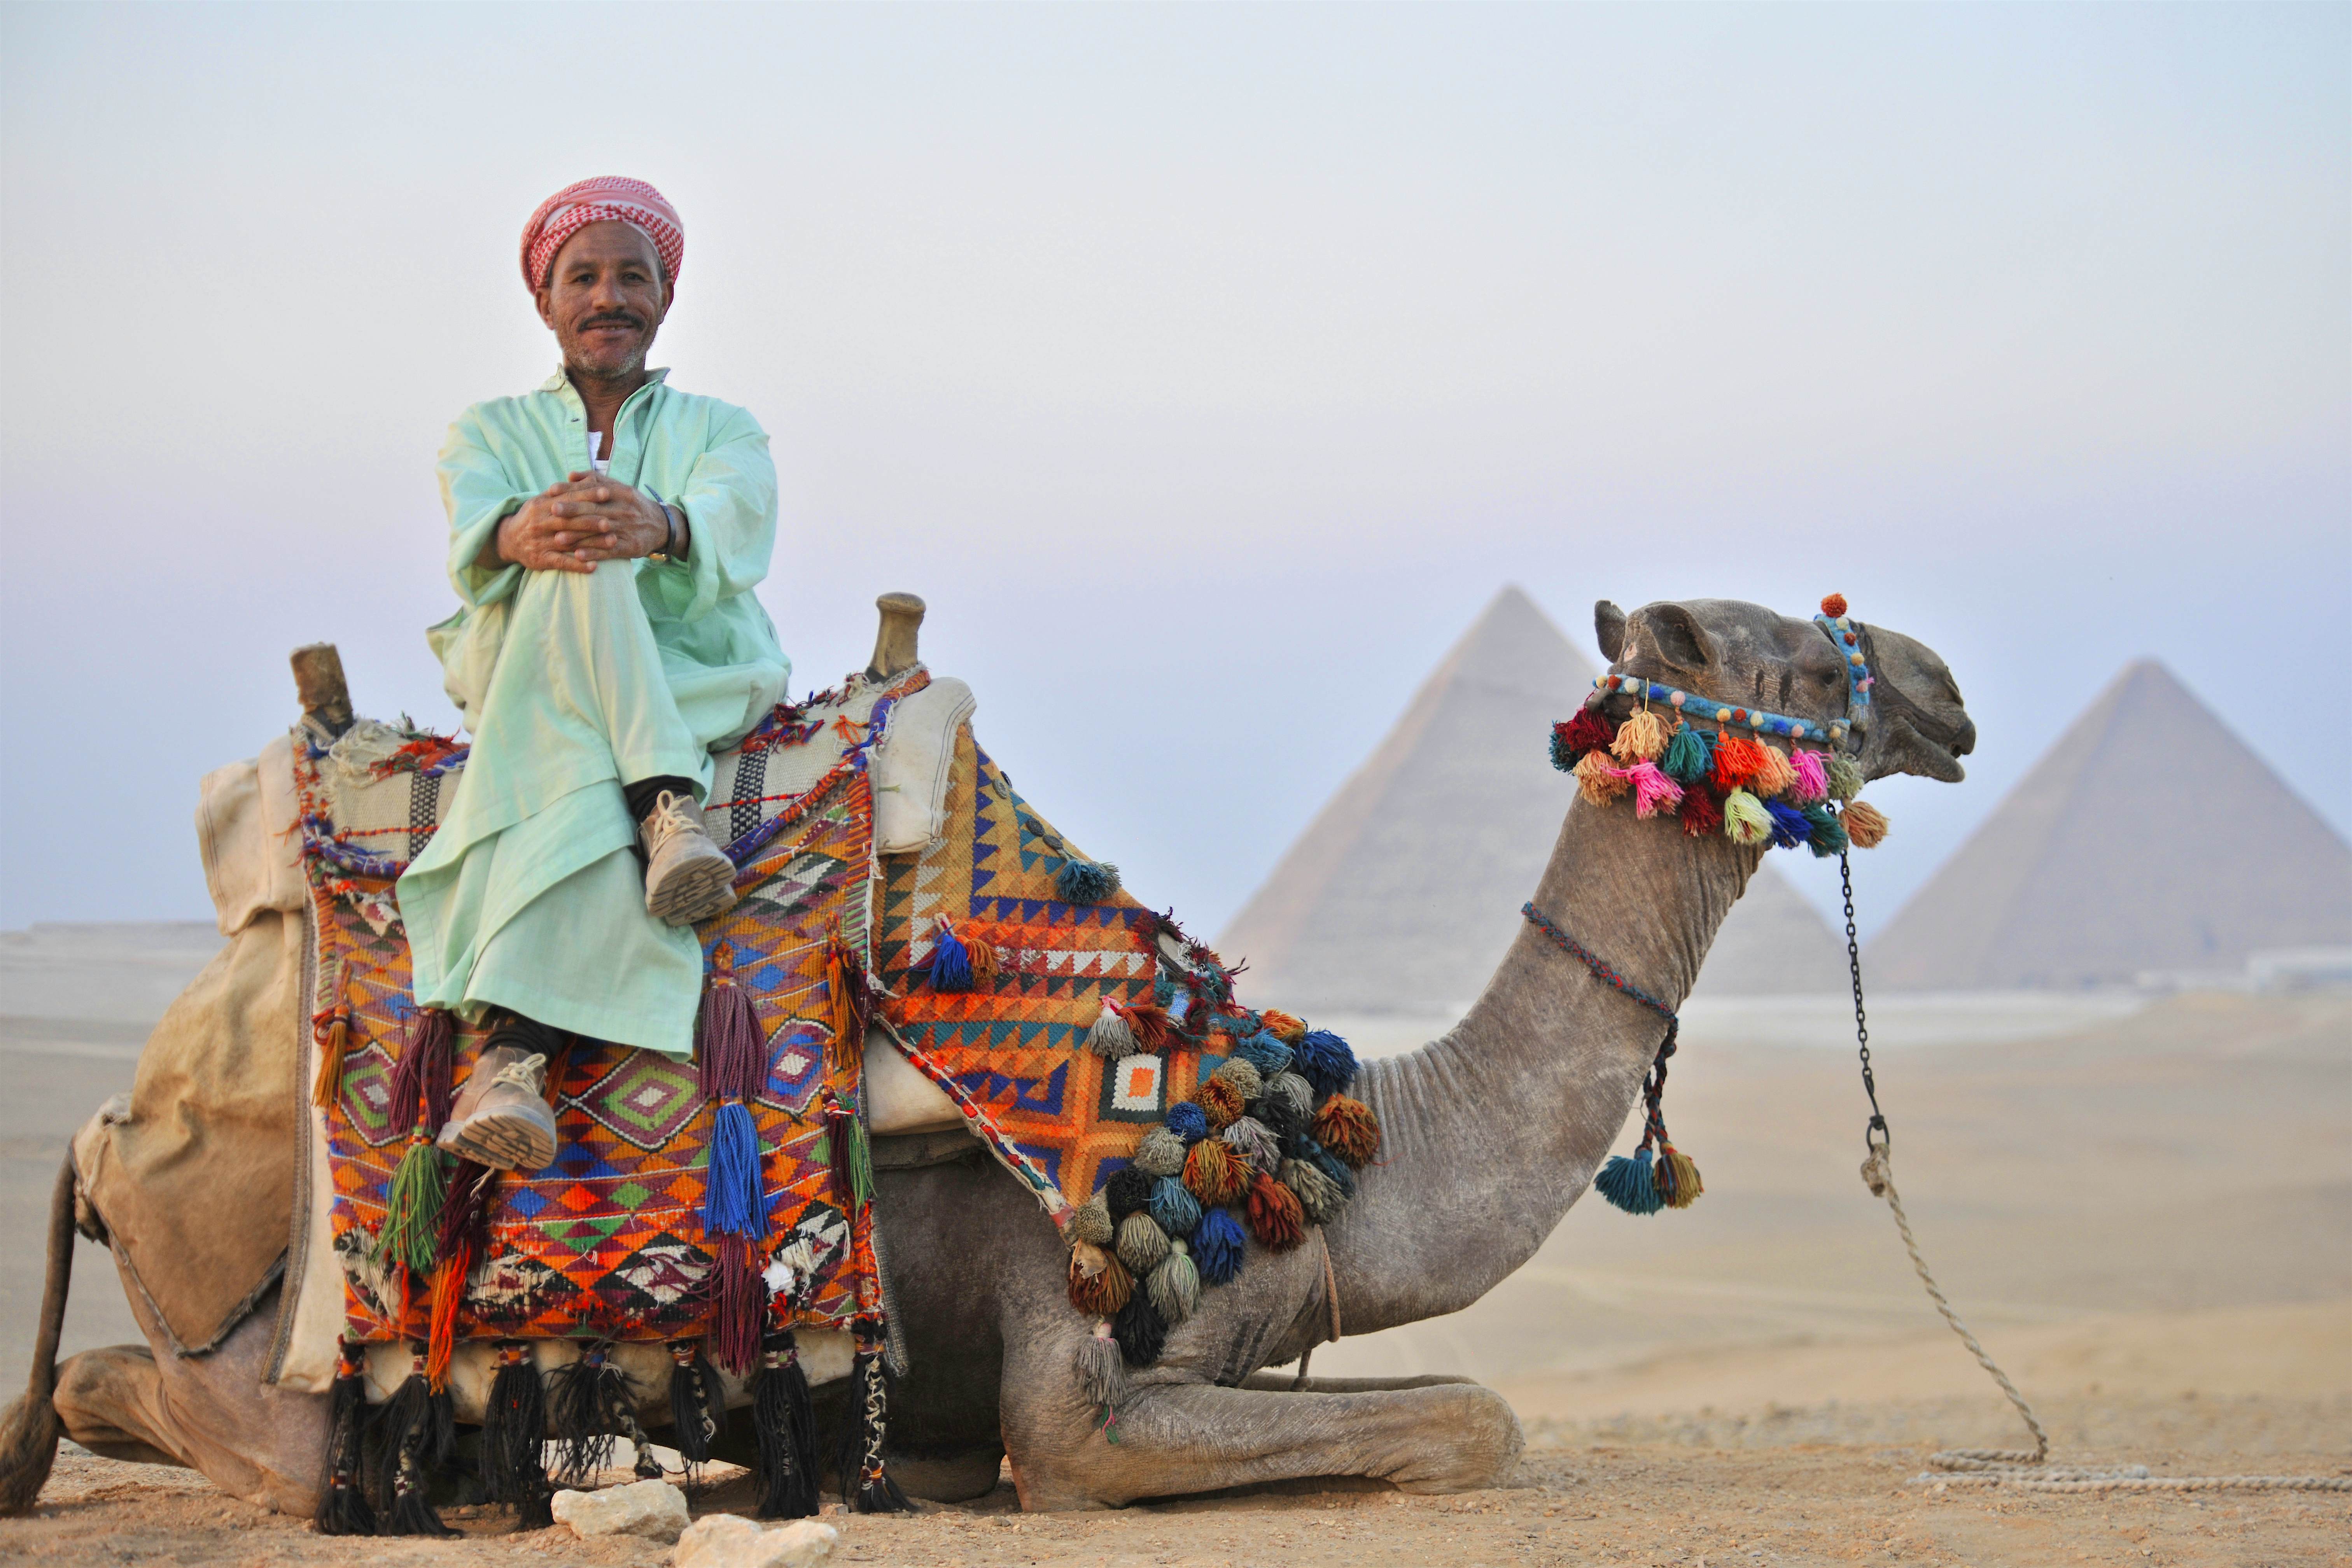 Egyptian man sitting on camel near pyramids of Giza